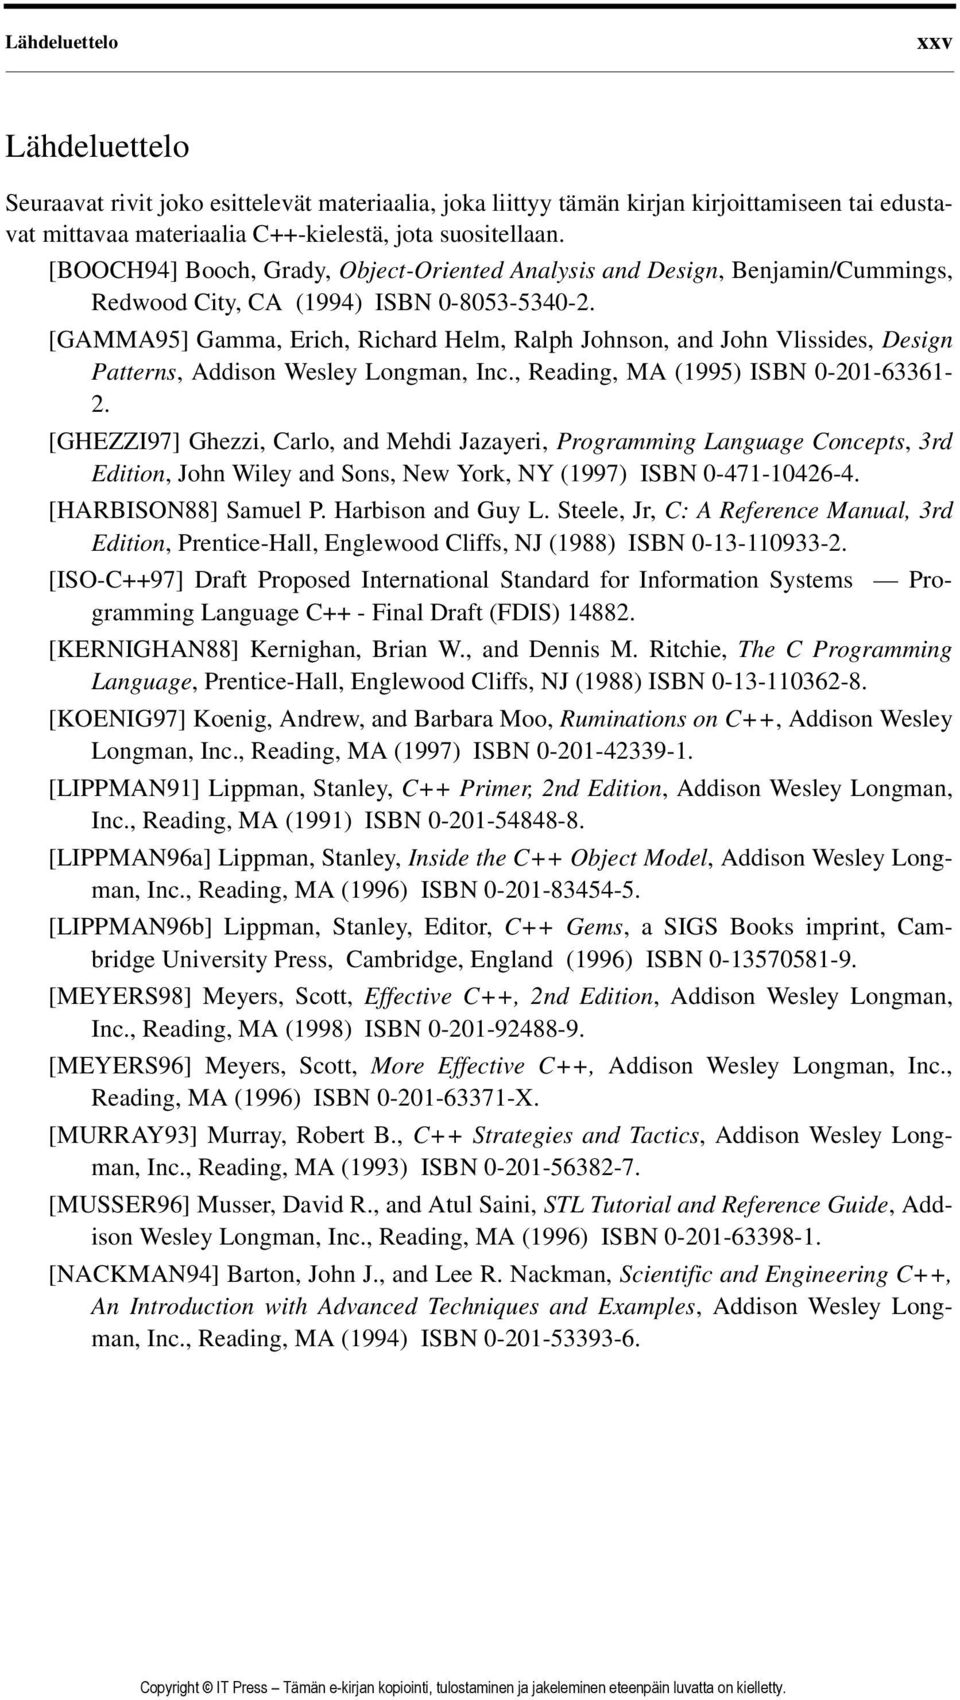 [GAMMA95] Gamma, Erich, Richard Helm, Ralph Johnson, and John Vlissides, Design Patterns, Addison Wesley Longman, Inc., Reading, MA (1995) ISBN 0-201-63361-2.